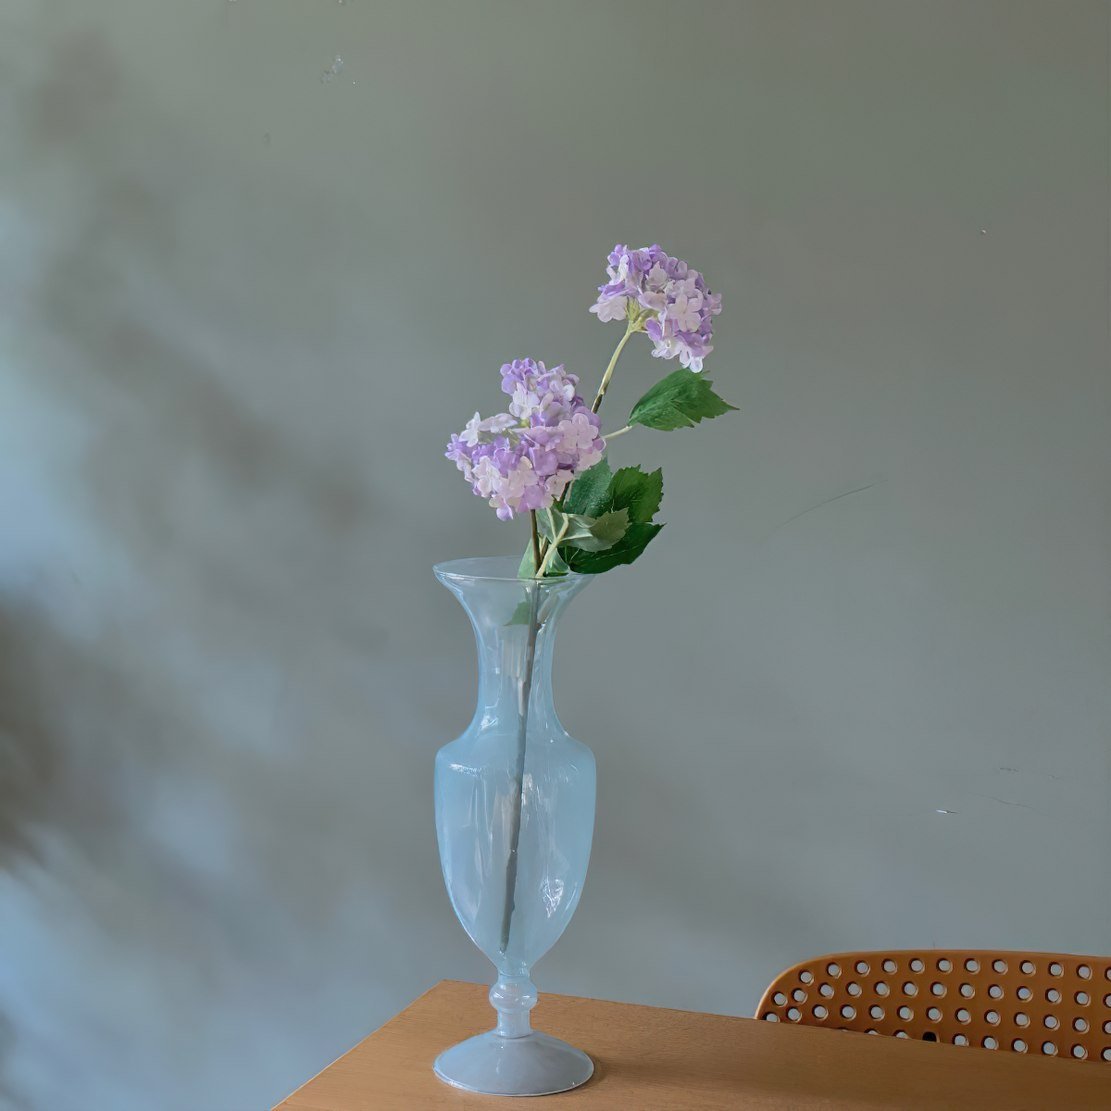 Blue romantic glass vase with purple flowers